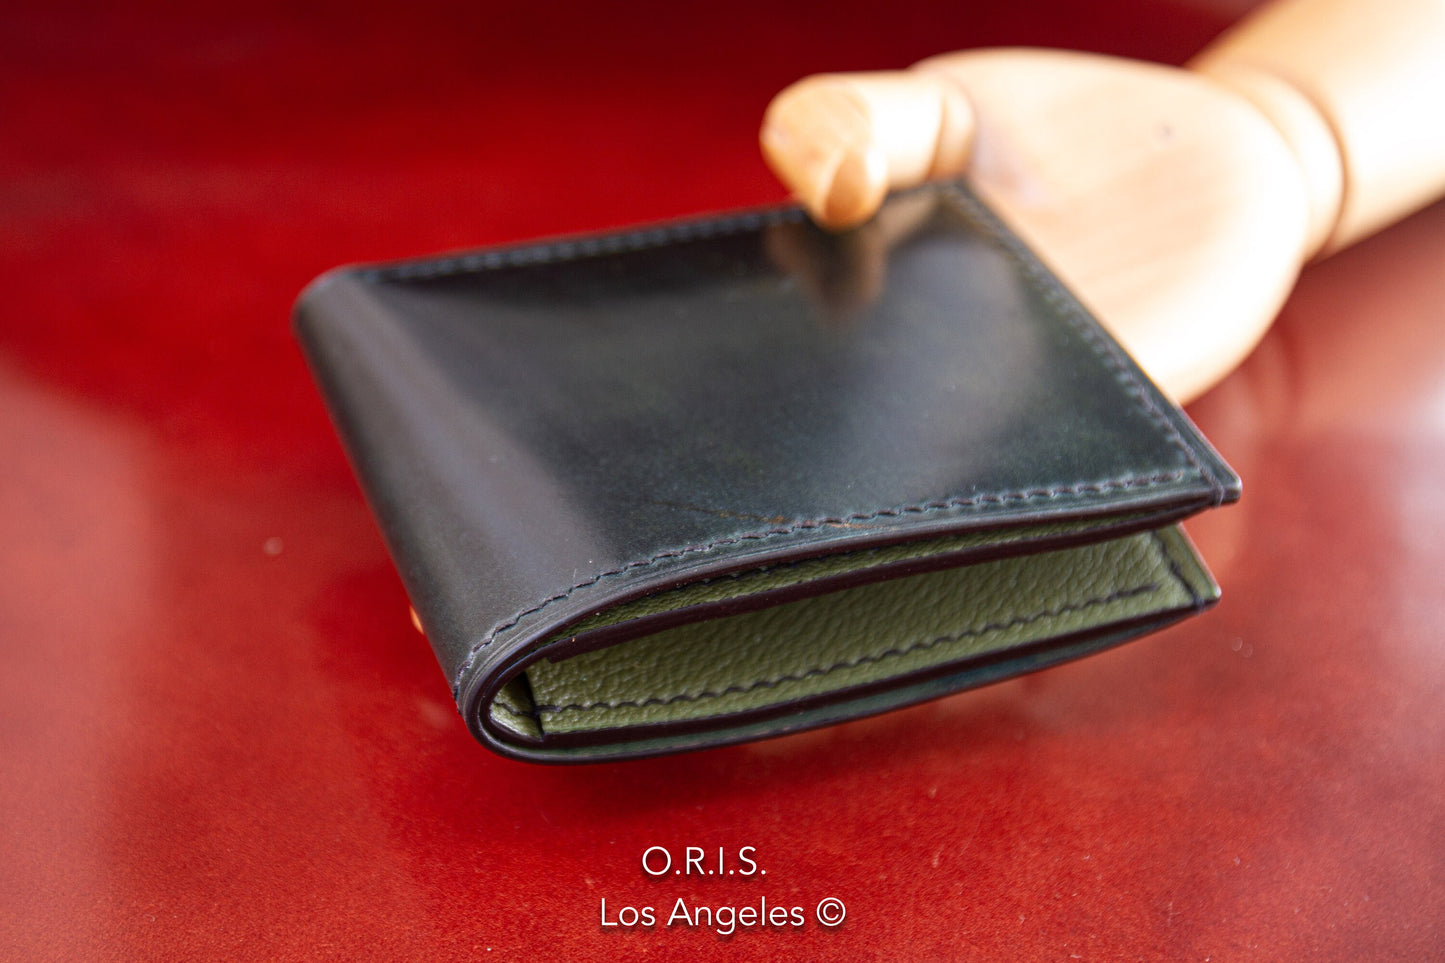 Bespoke Money Clip Wallet Handmade From Shell Cordovan 